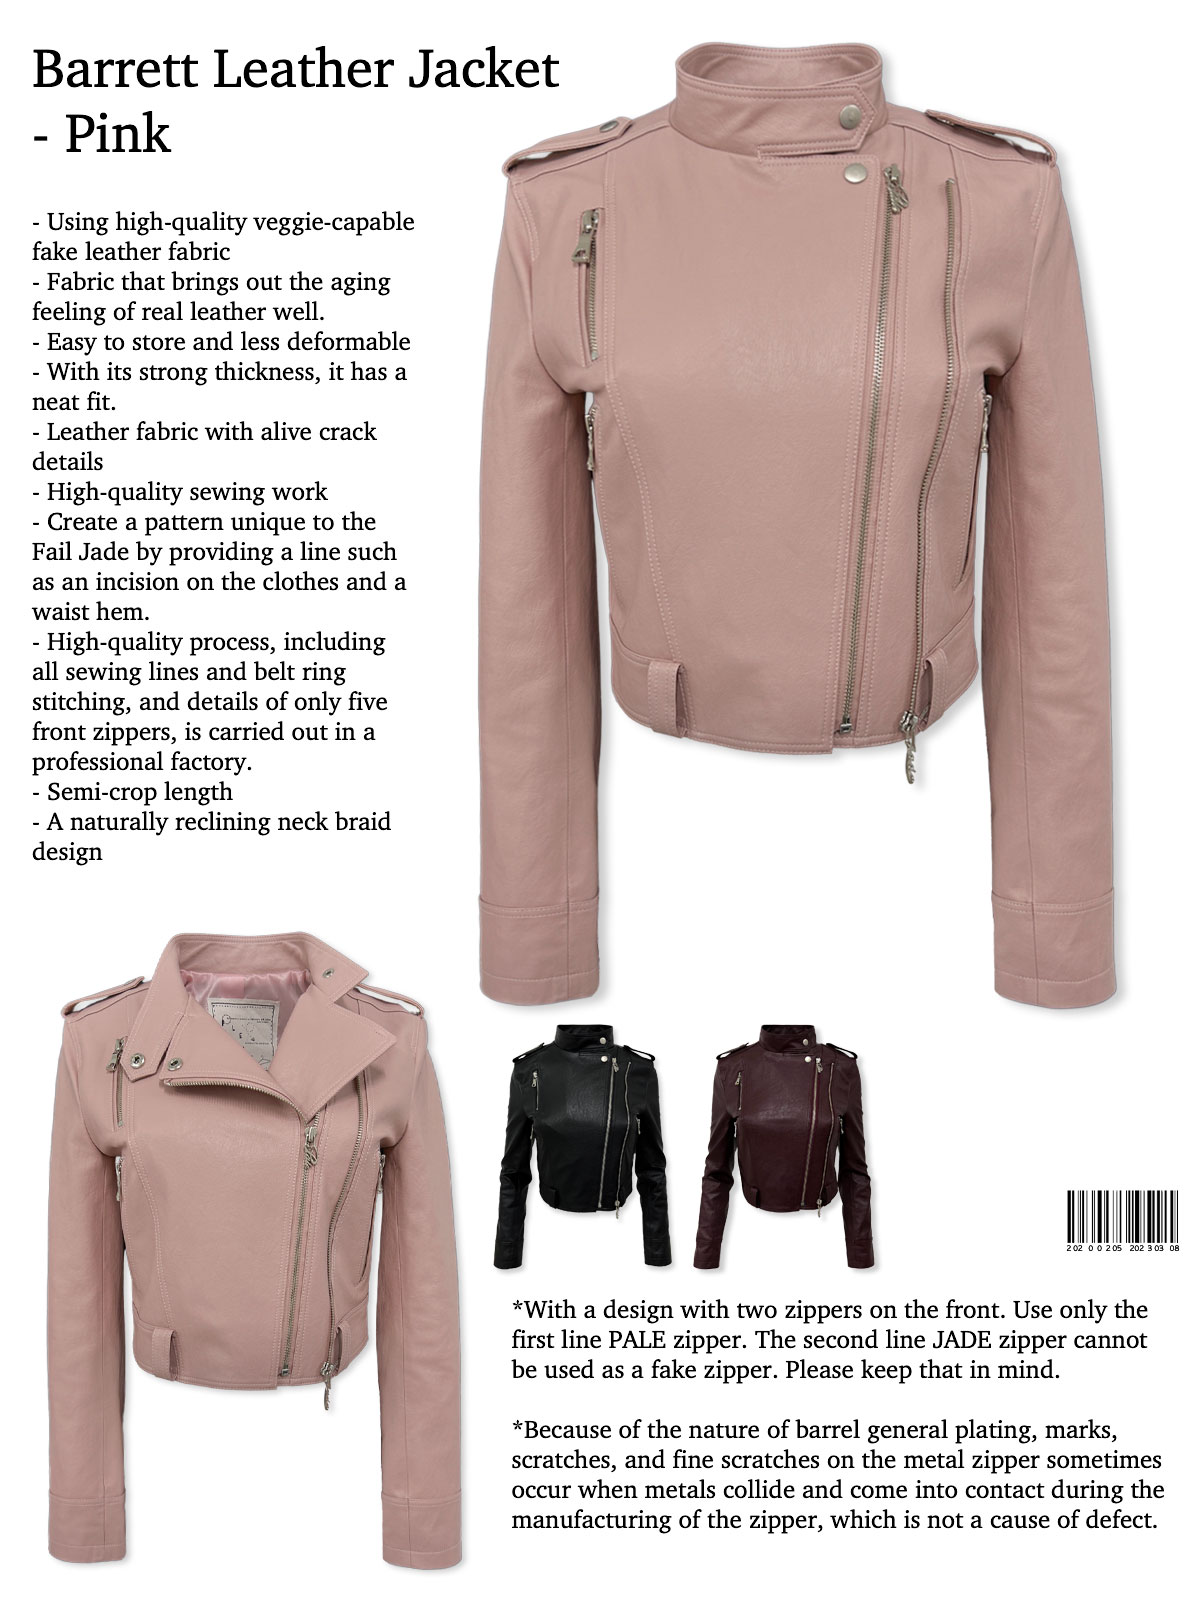 Barrett Leather Jacket - Pink